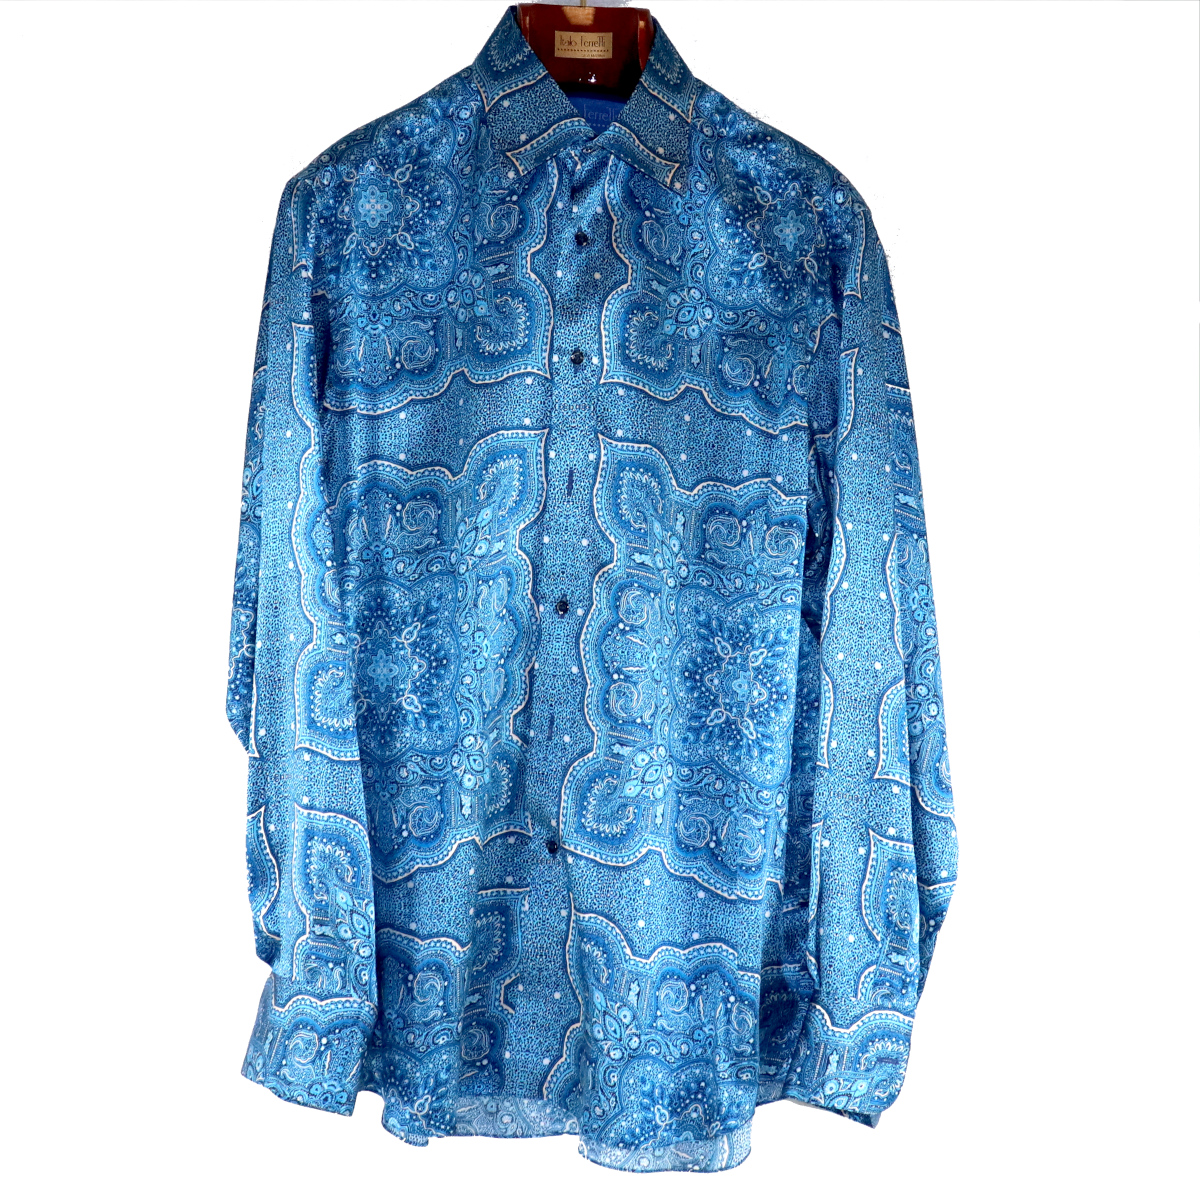 Langärmliges Hemd aus 100% Seide, Mandala-Paisley-Muster in Blautönen,  handgefertigt in Italien - Italo Ferretti handgemachte Luxus Krawatten